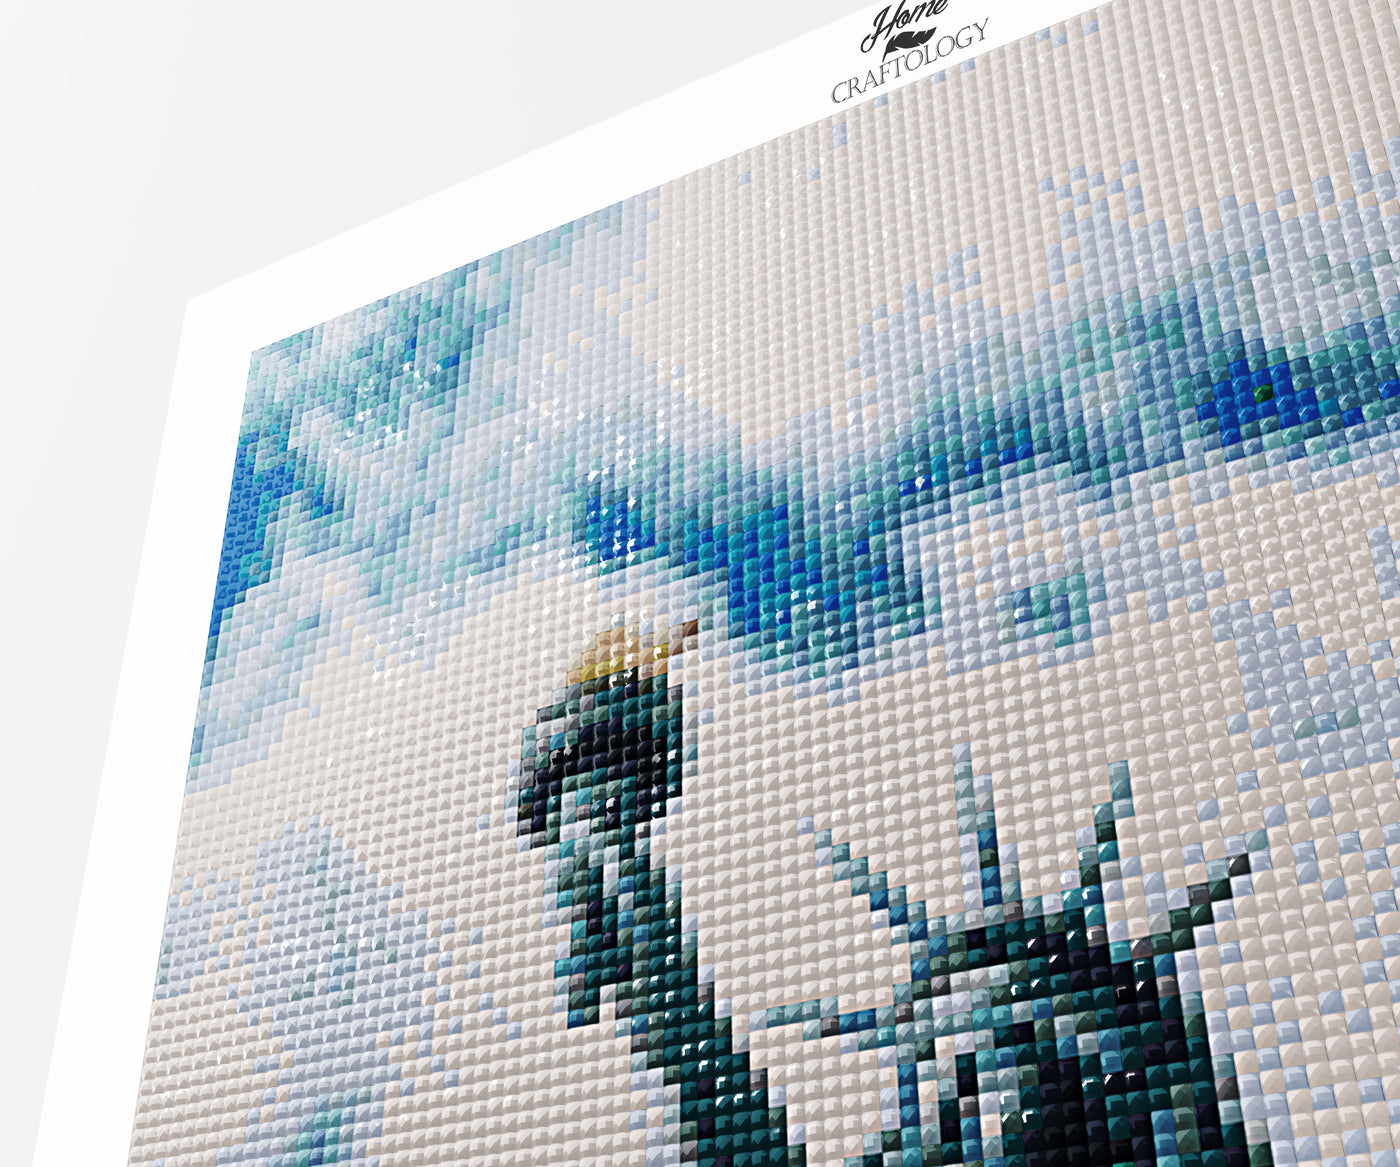 Iconic Statue of Liberty - Premium Diamond Painting Kit